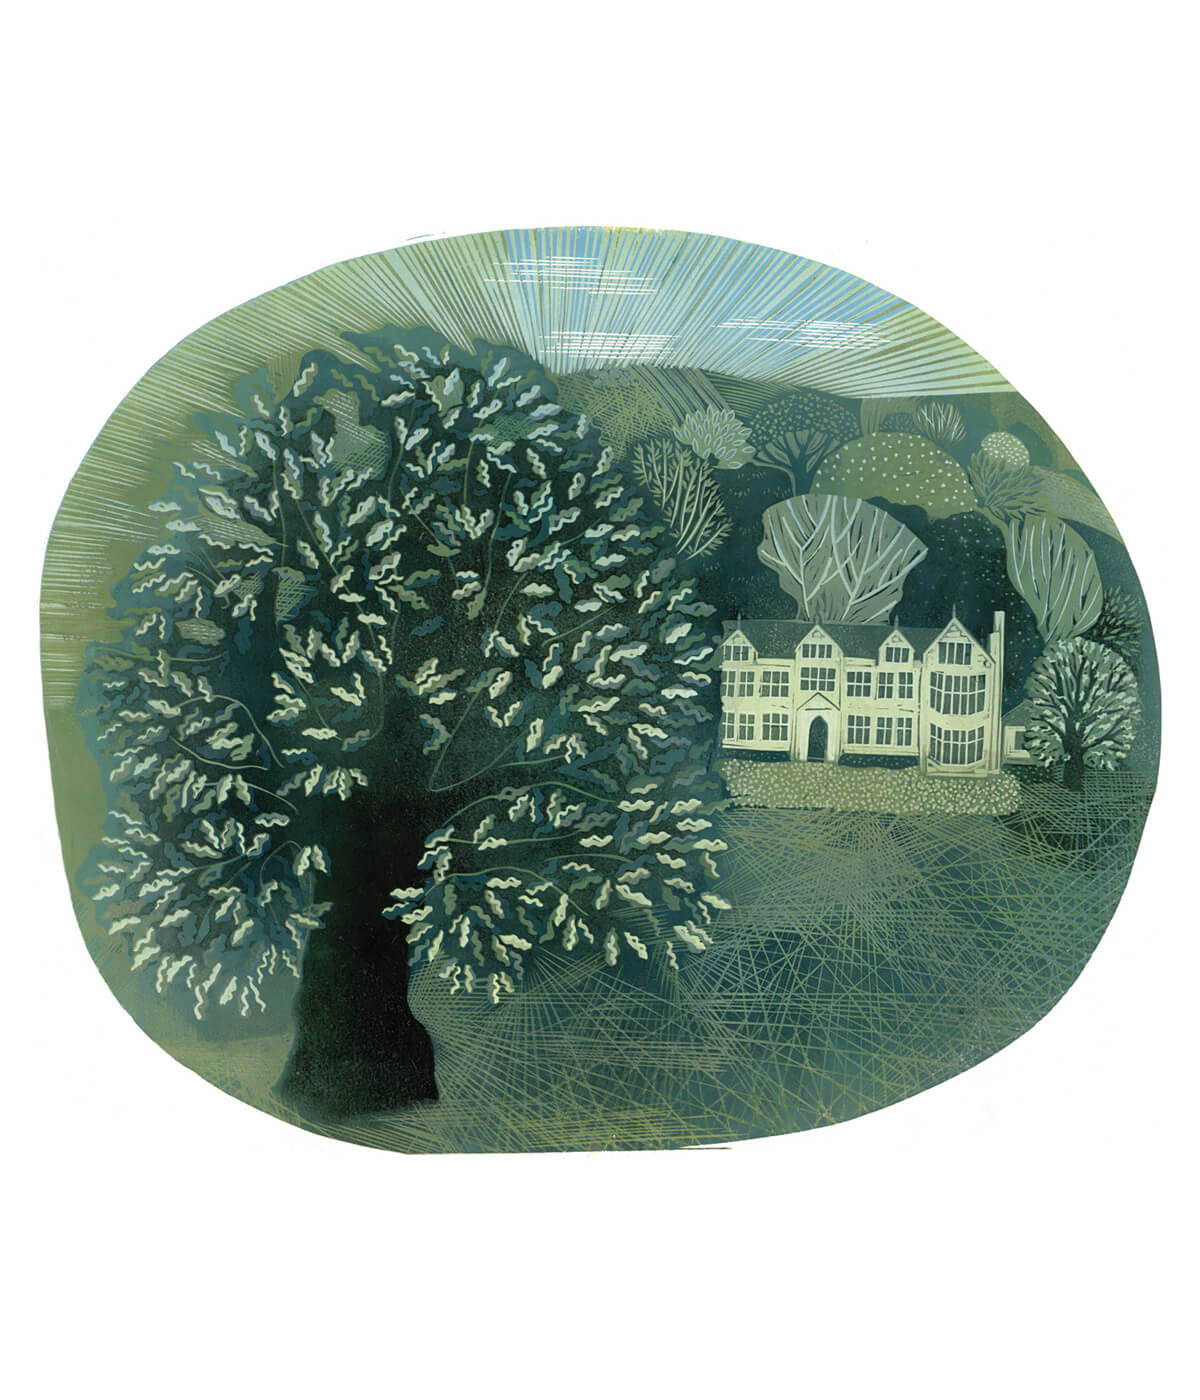 Mayshine at Launde, a linocut print by Sarah Kirby